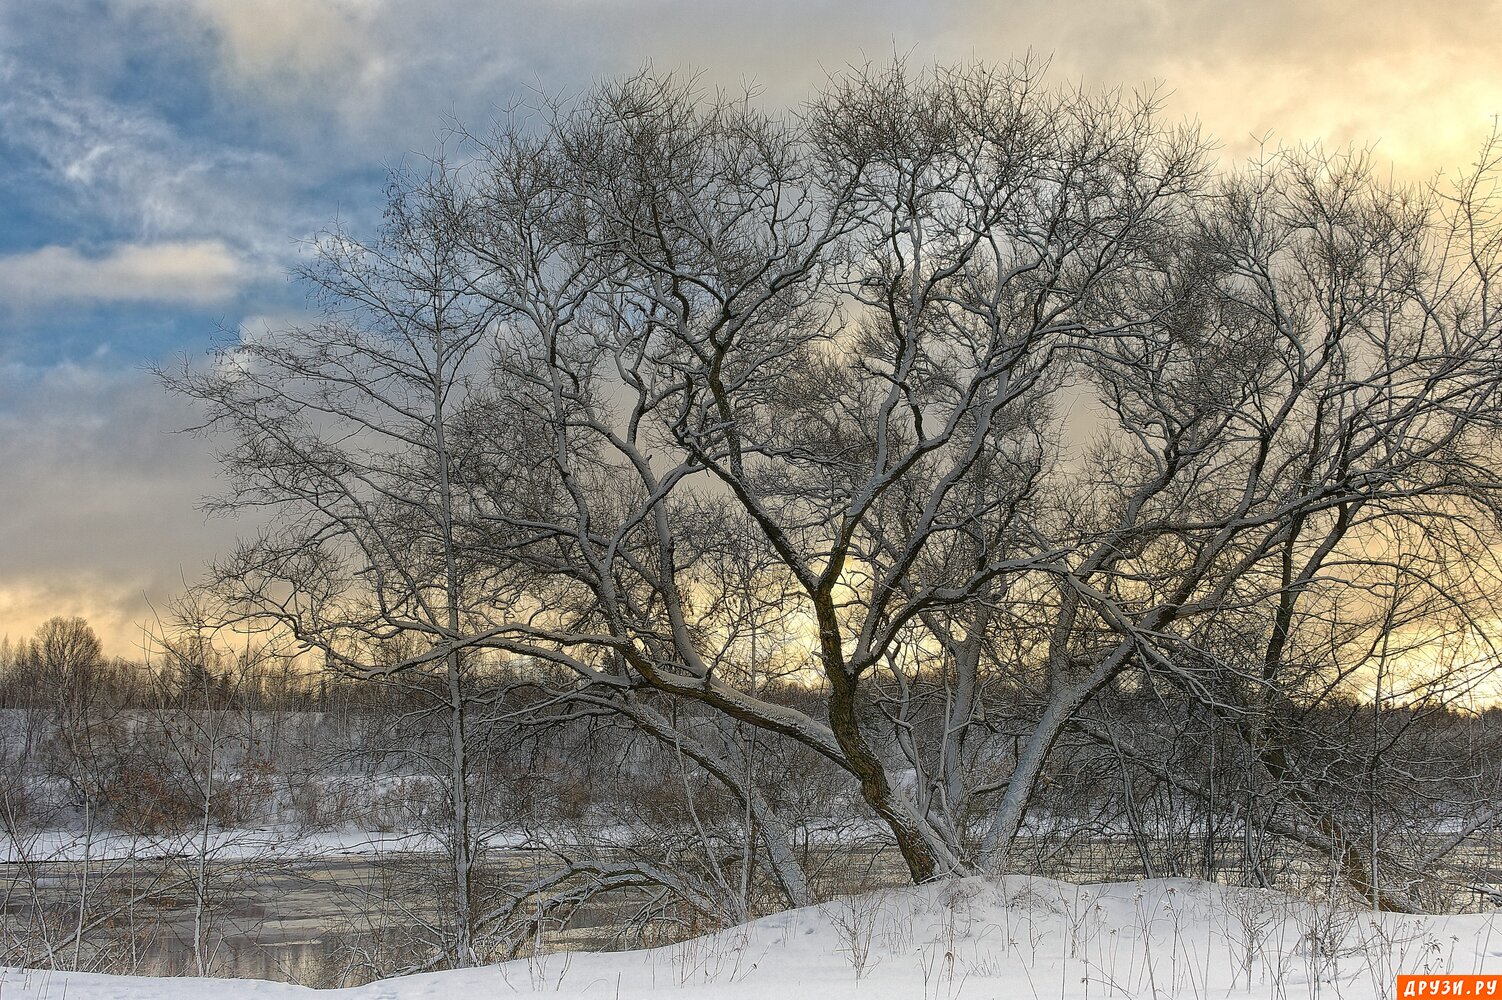 Winter landscape 1